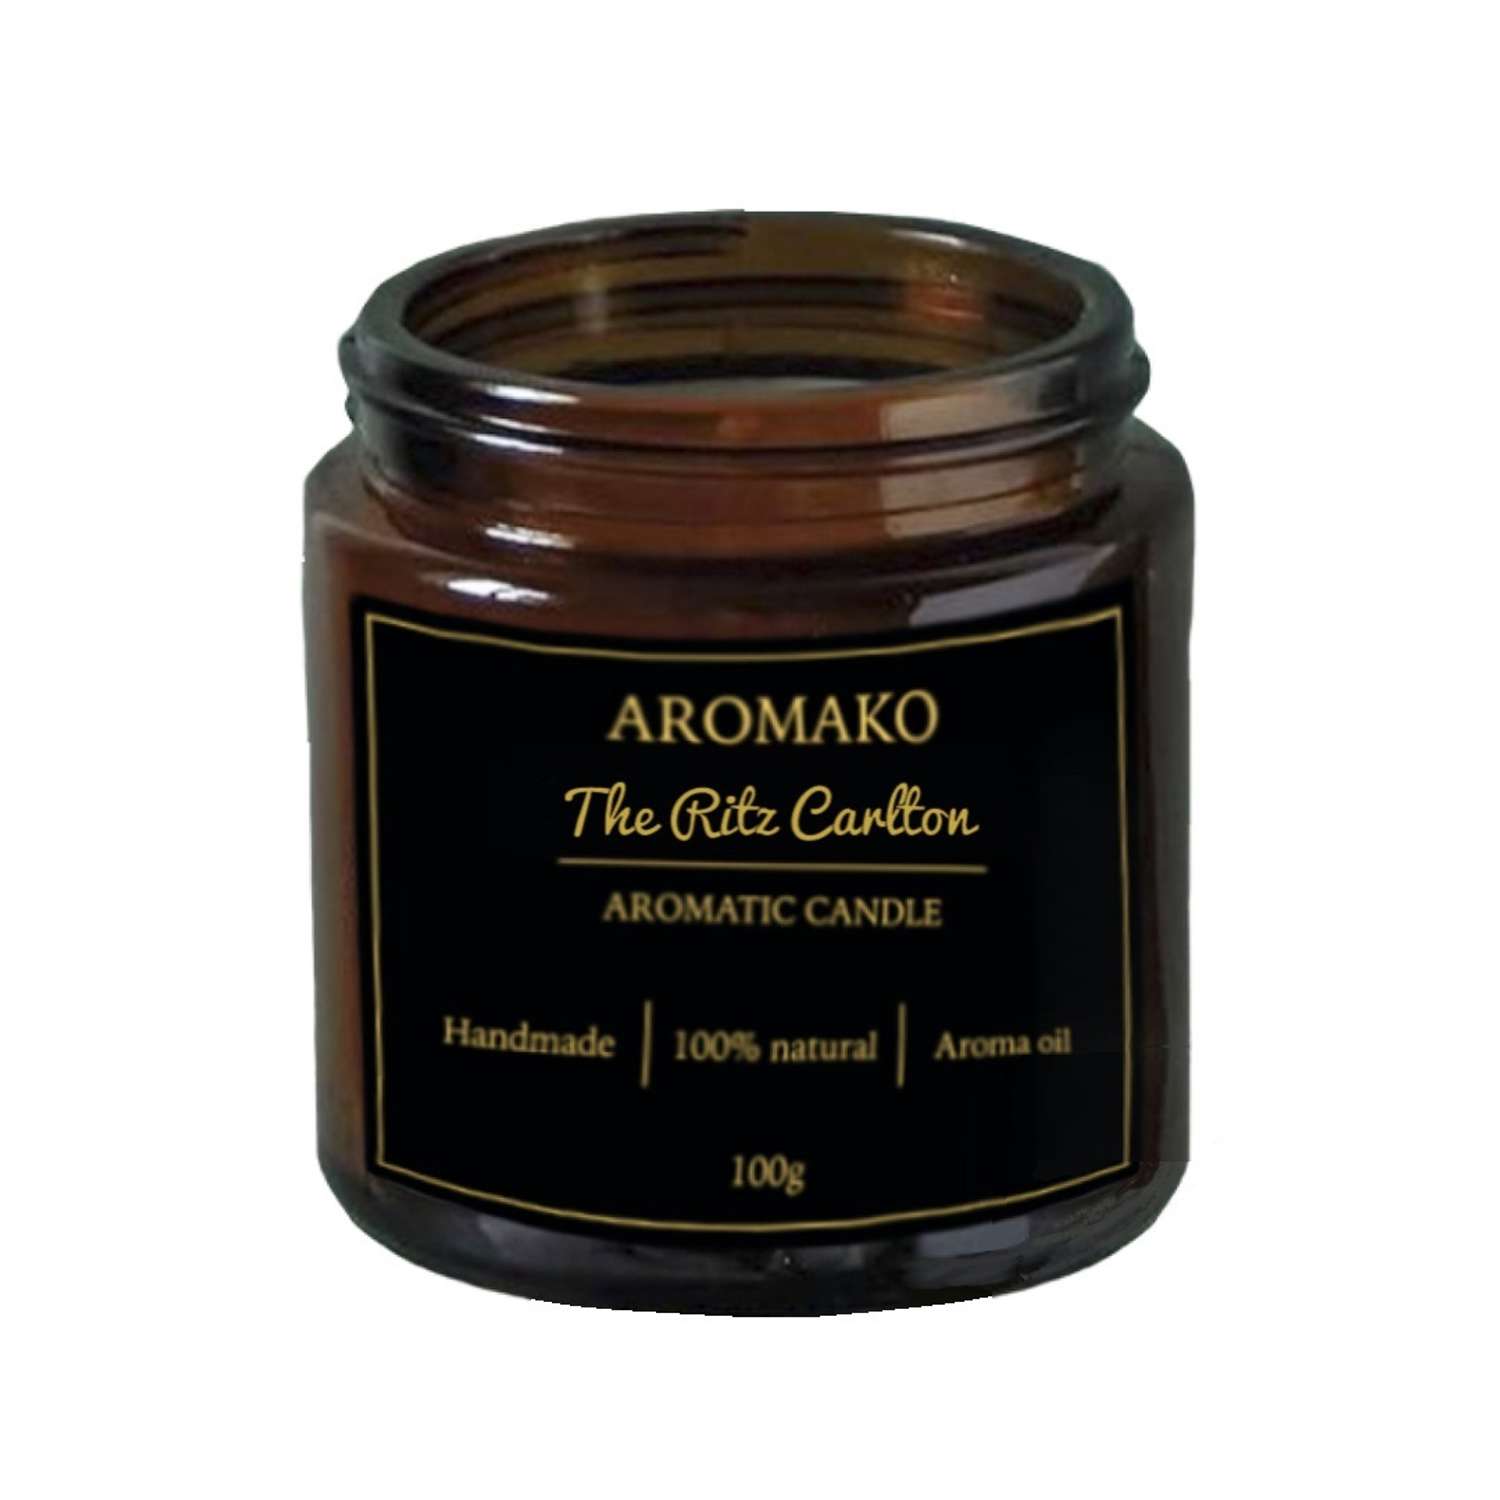 Ароматическая свеча AromaKo The Ritz Carlton 100 гр - фото 1